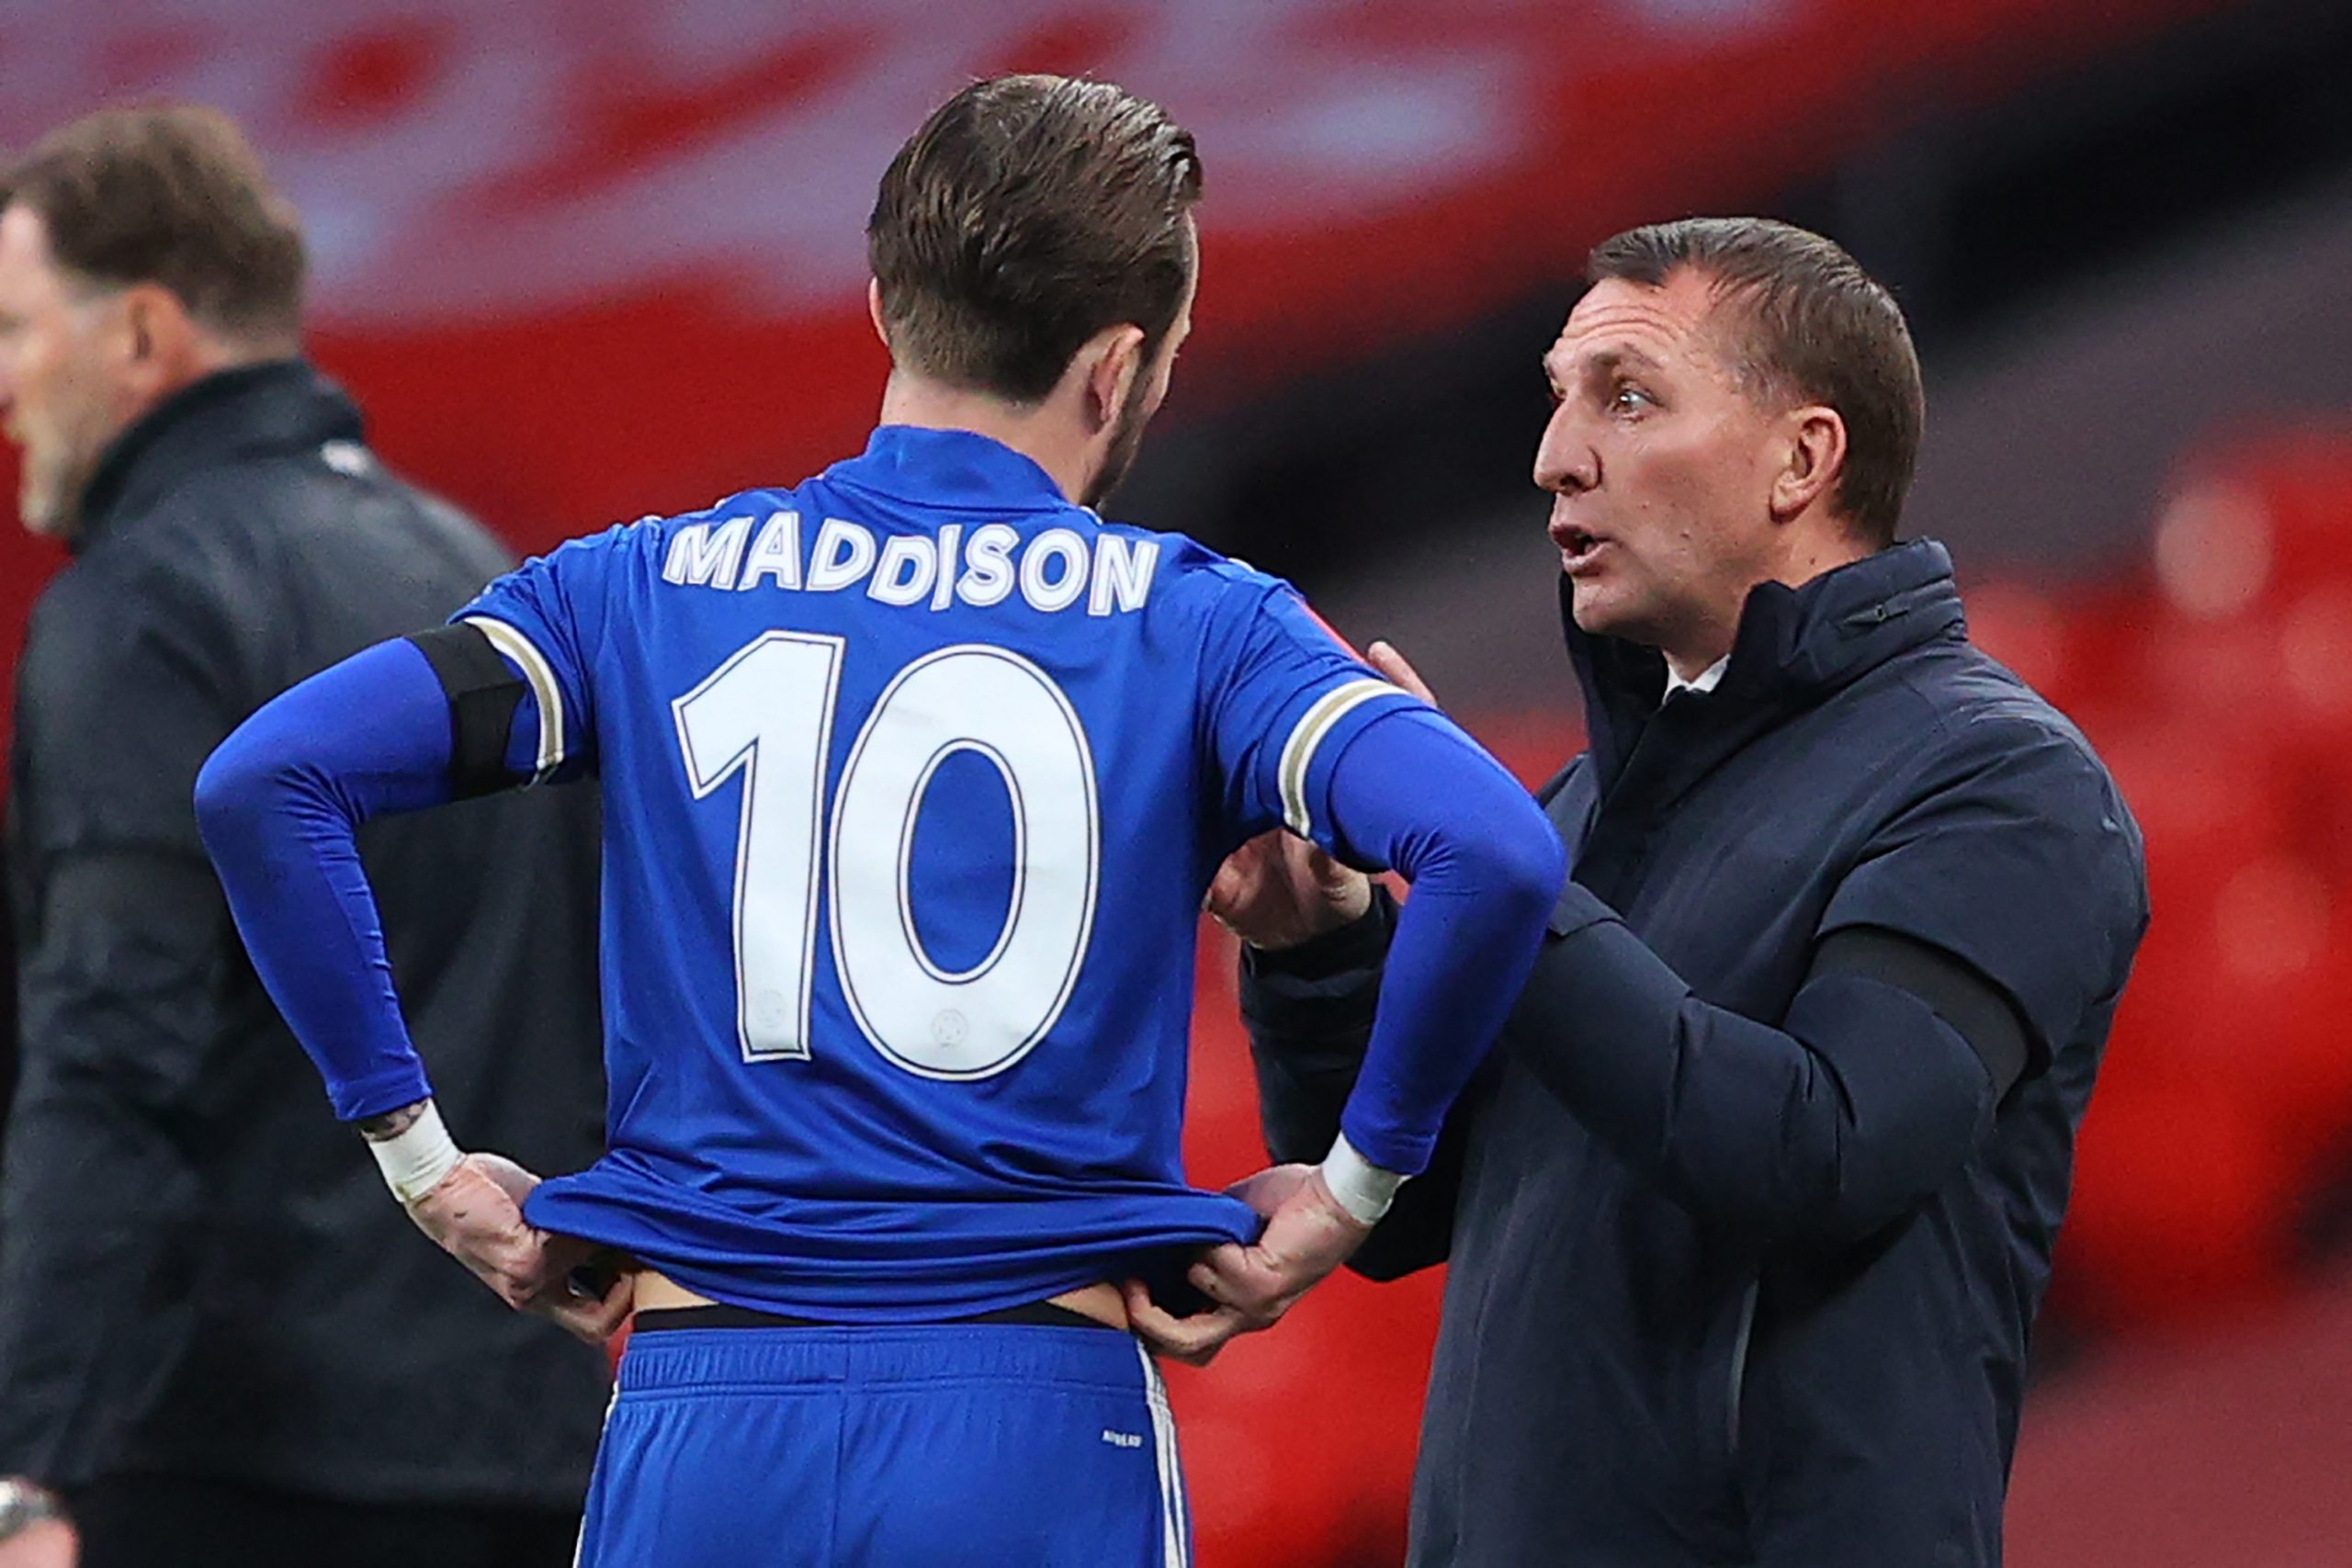 Chelsea join the race for Tottenham Hotspur target James Maddison.